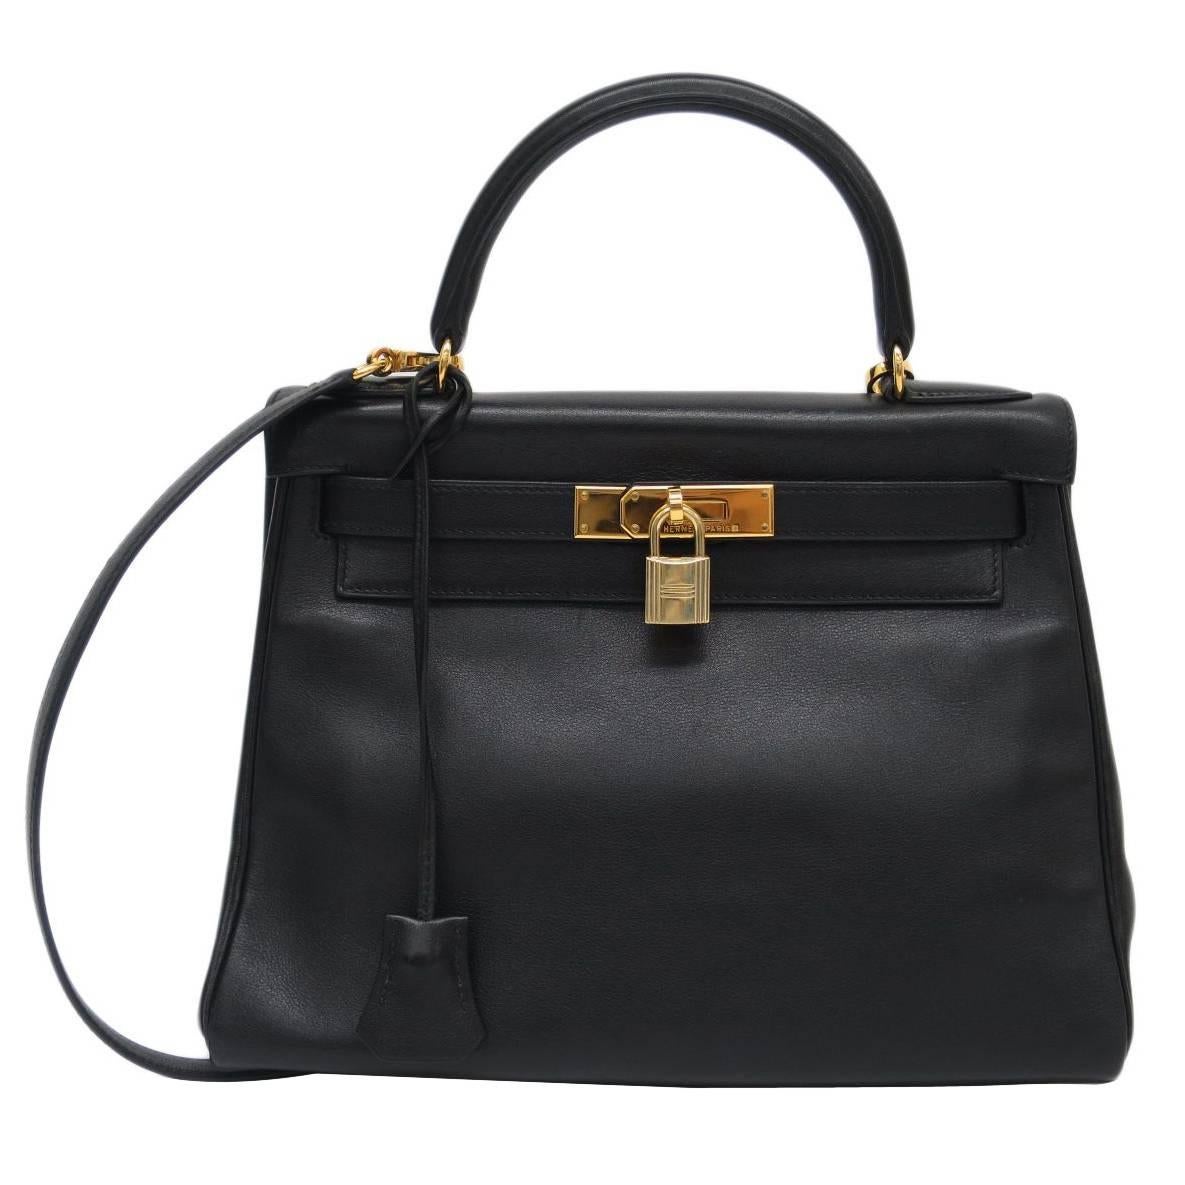 Hermes Black Kelly 28 Top Handle Satchel Shoulder Bag with Accessories in Box